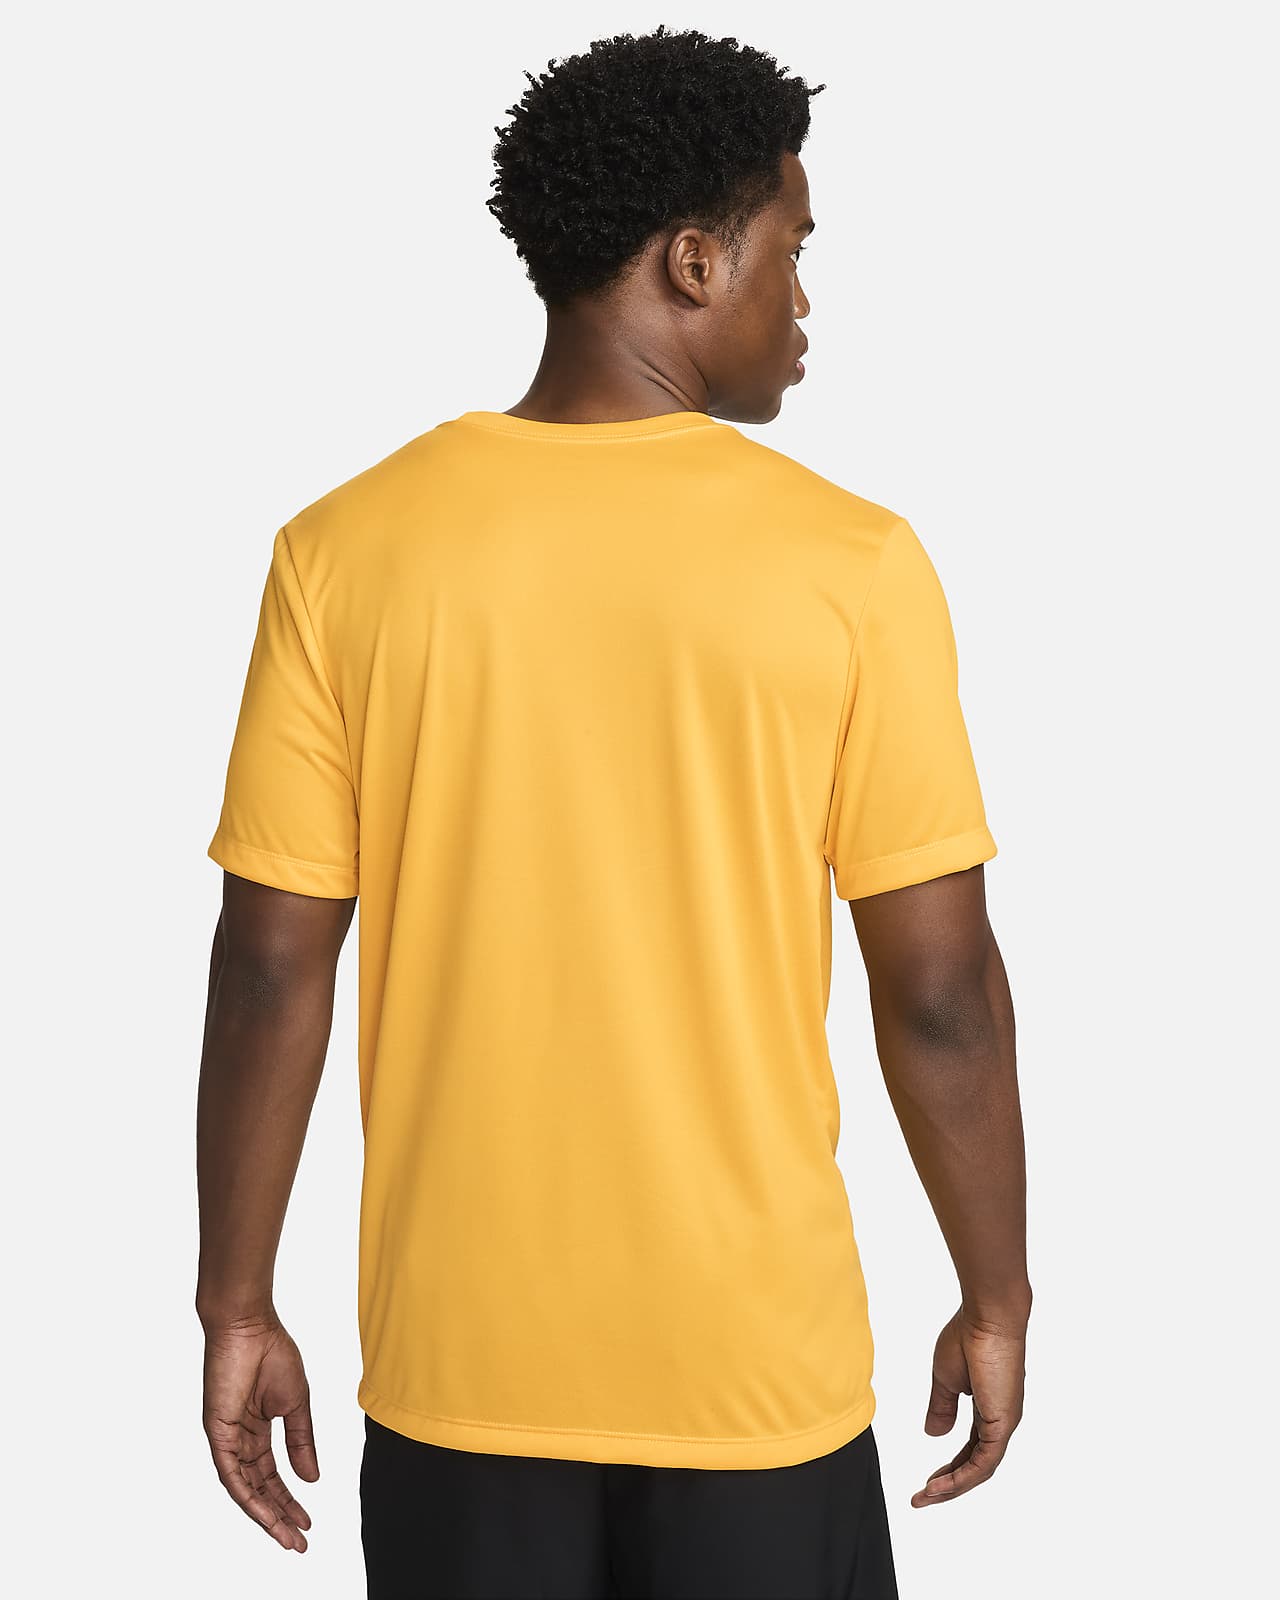 Nike Womens Dri-Fit Yoga T-Shirt Orange L